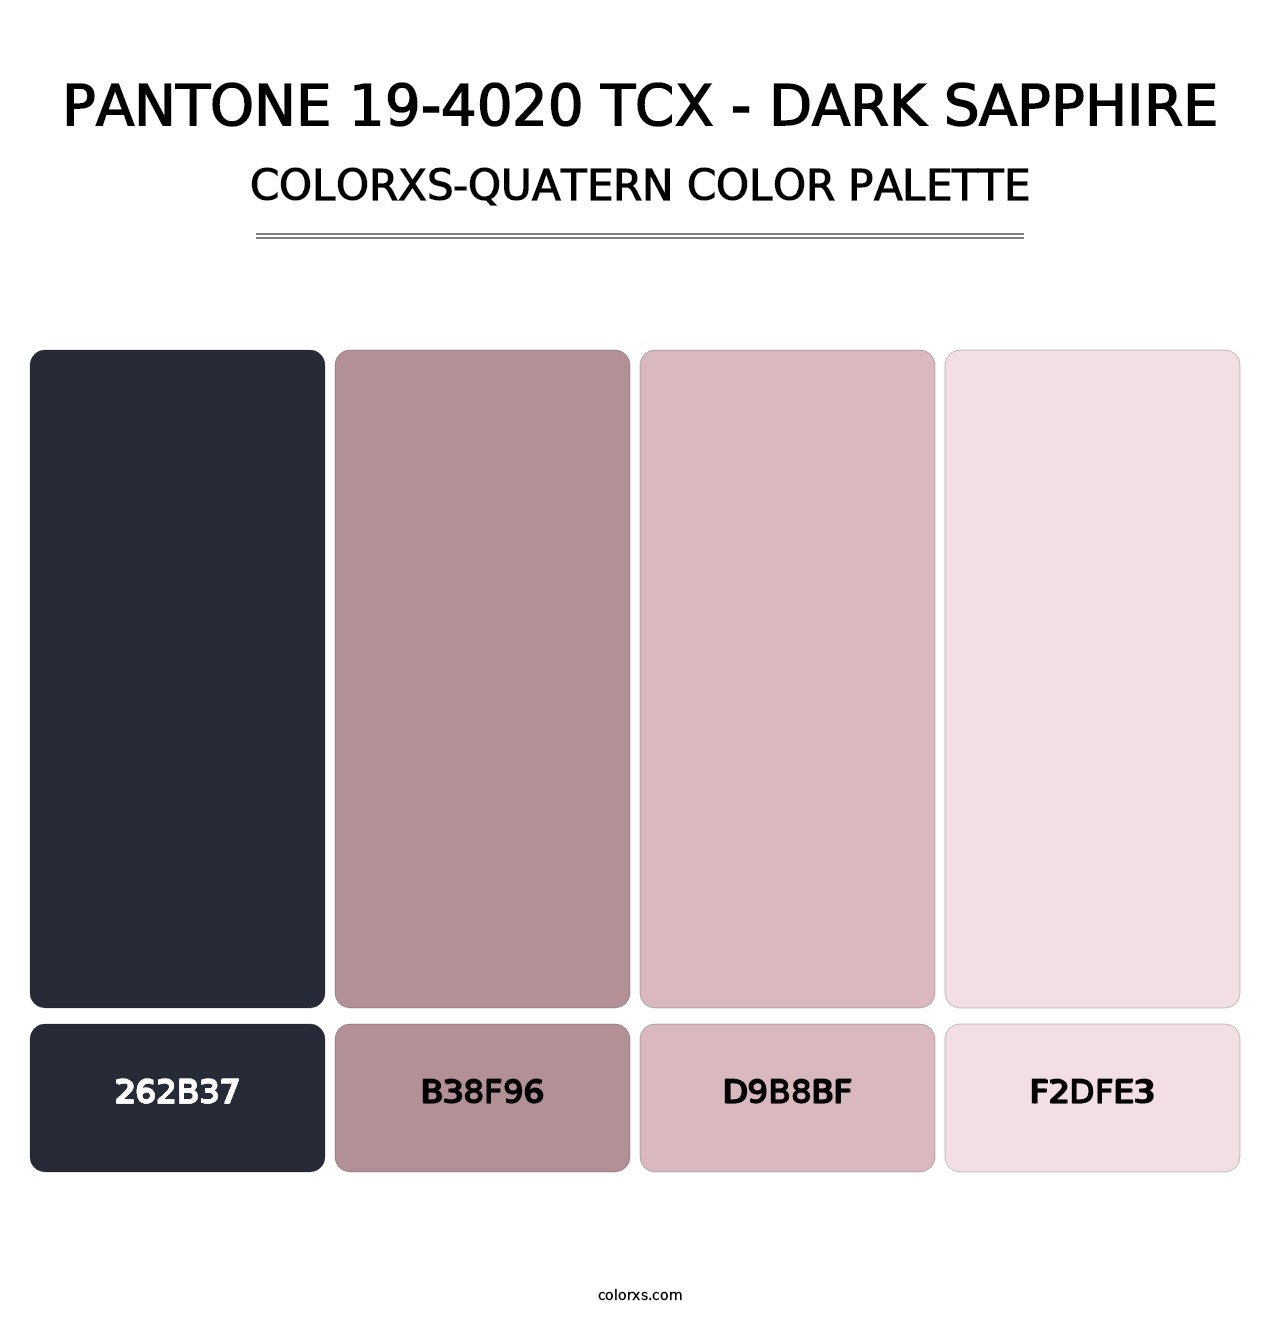 PANTONE 19-4020 TCX - Dark Sapphire - Colorxs Quatern Palette